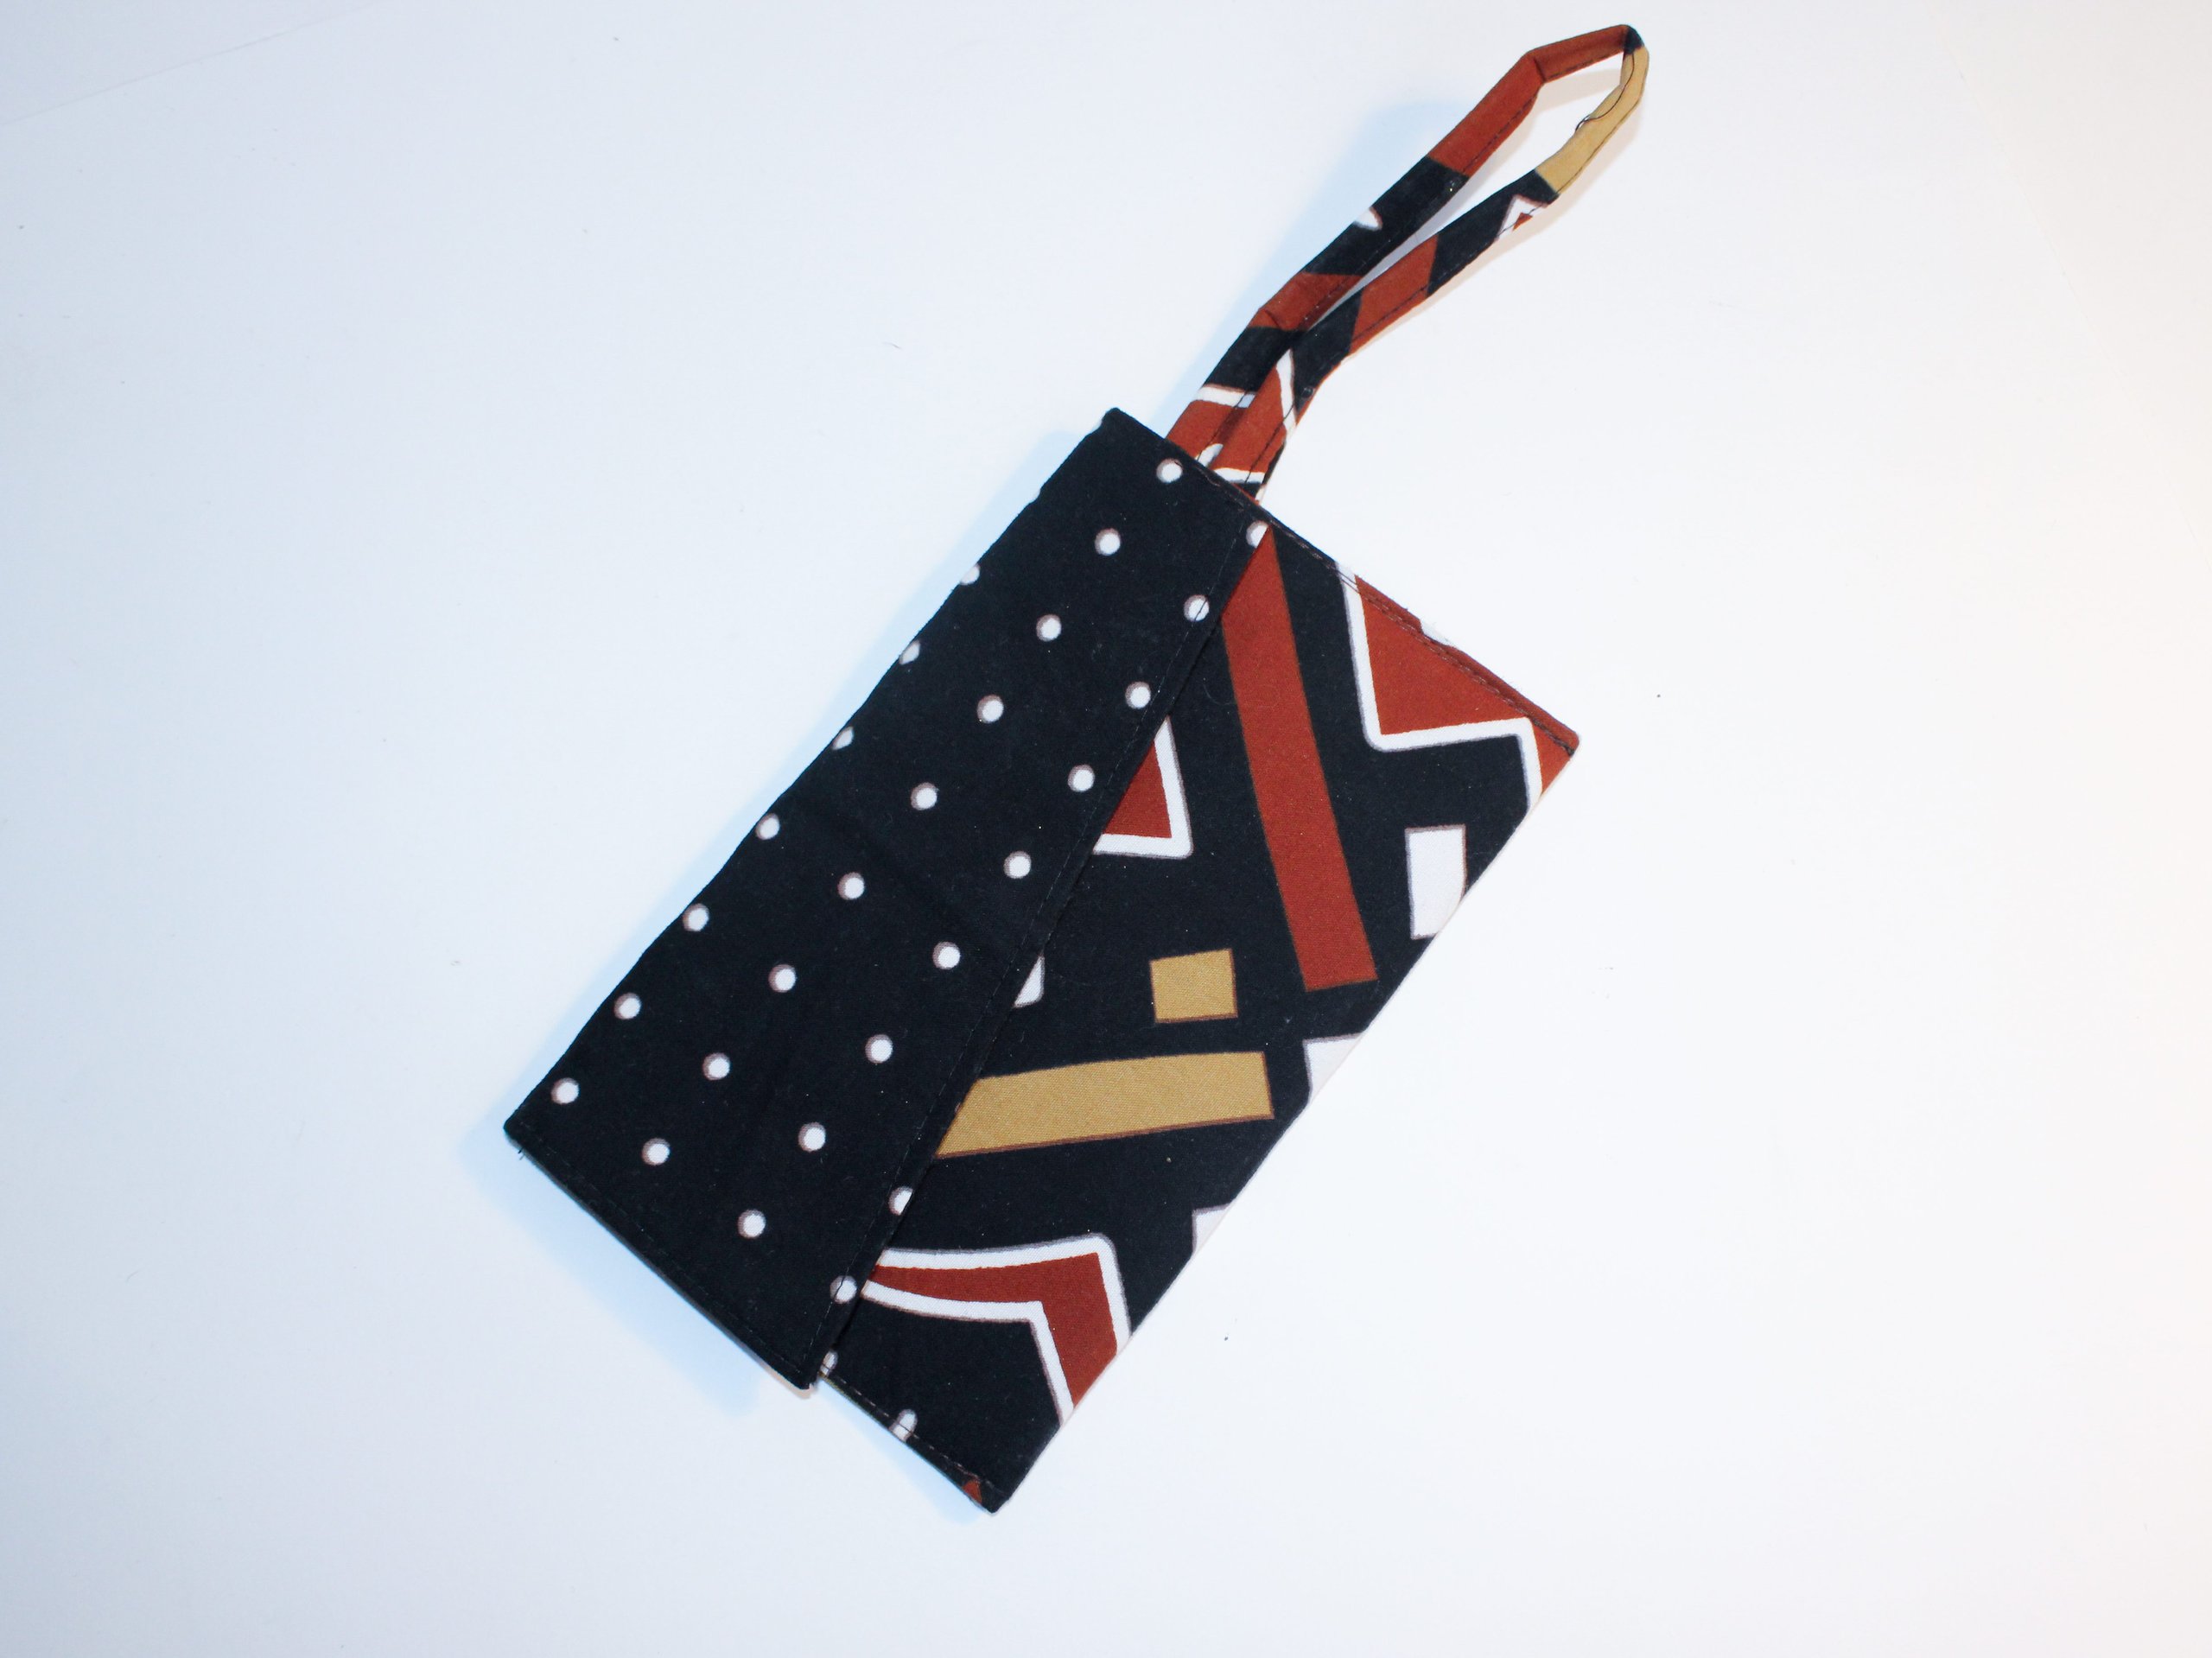 Wallet/ Wristlet Bag | Brown Ankara Fabric & Vegan Leather